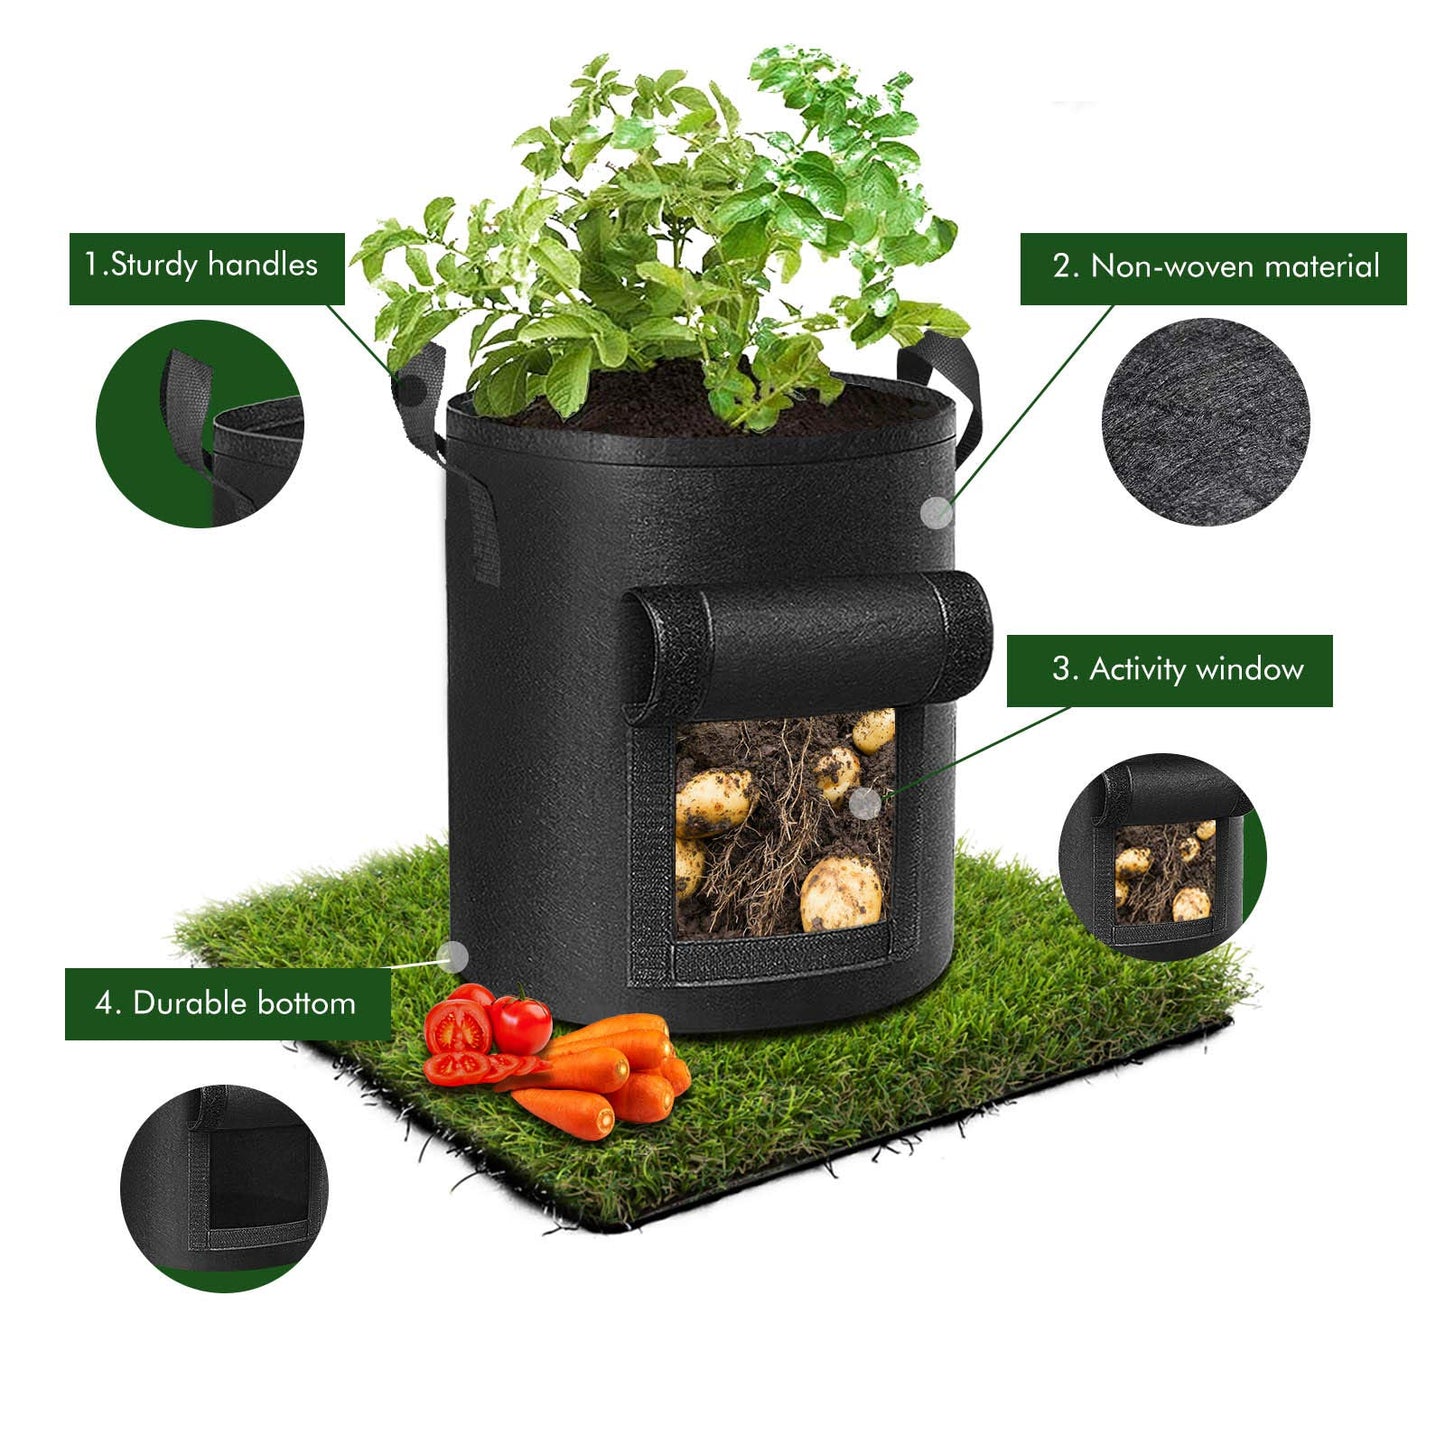 Plant Grow Bag Potato Container Pots with Handles 5-Pack 26 Litre